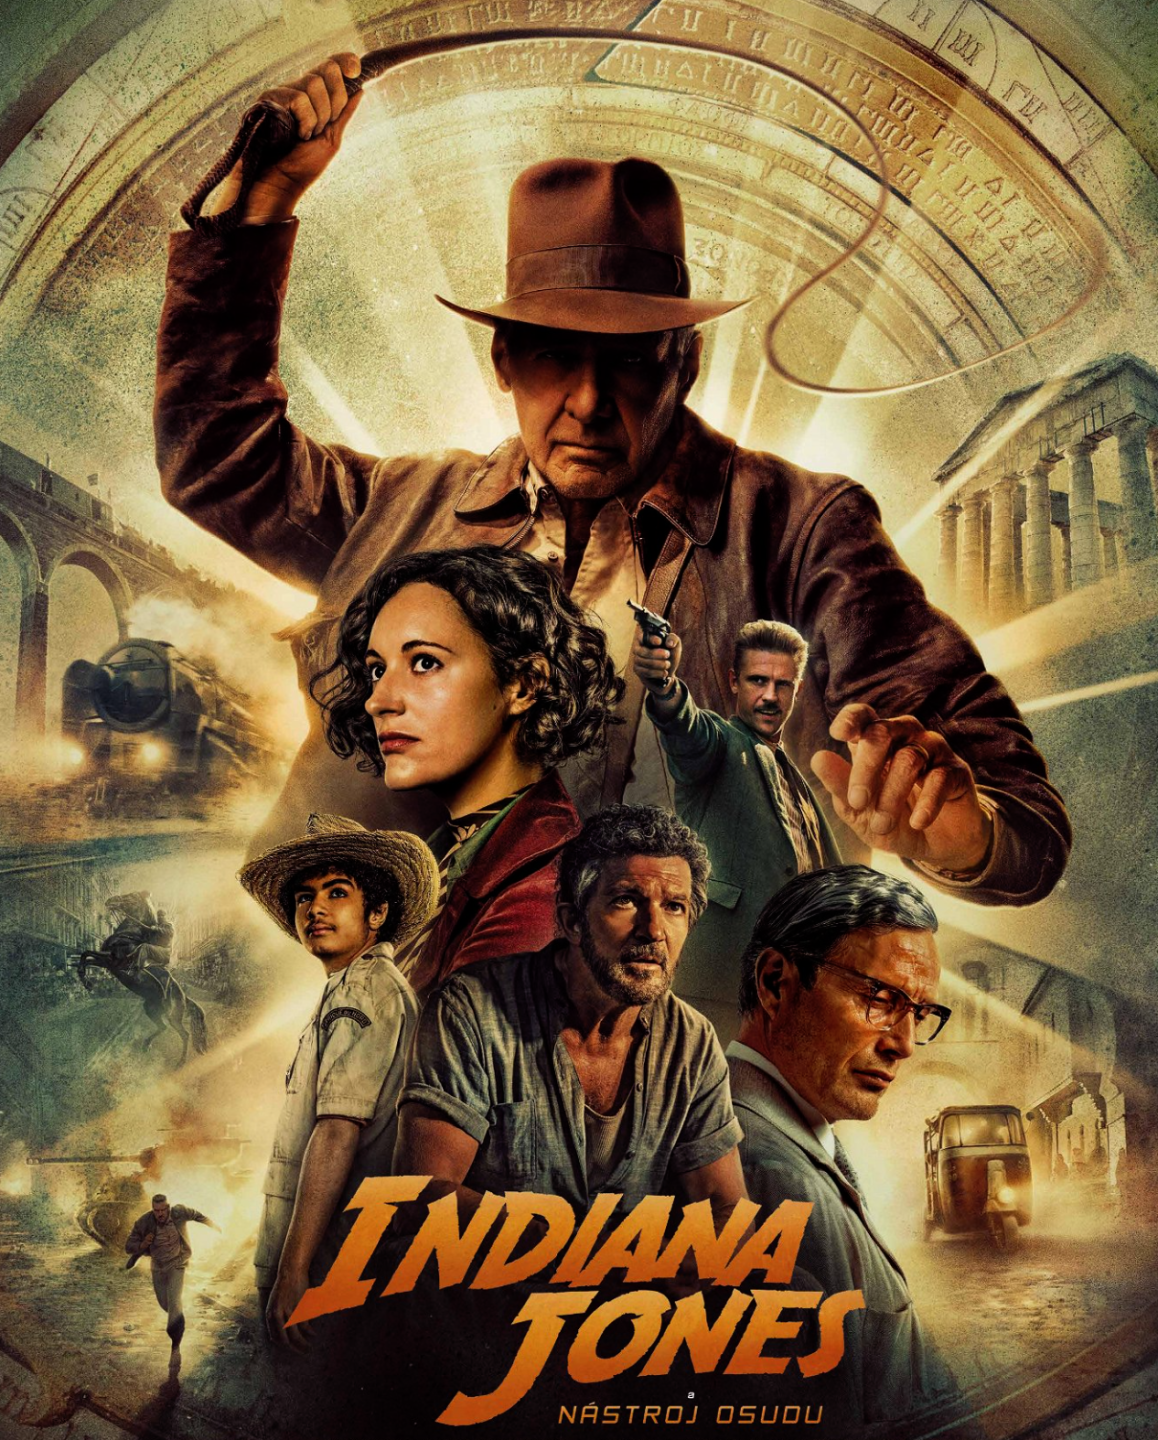 Stiahni si Blu-ray Filmy Indiana Jones a nástroj osudu / Indiana Jones and the Dial of Destiny 2023 1080p CEE Blu-ray = CSFD 69%